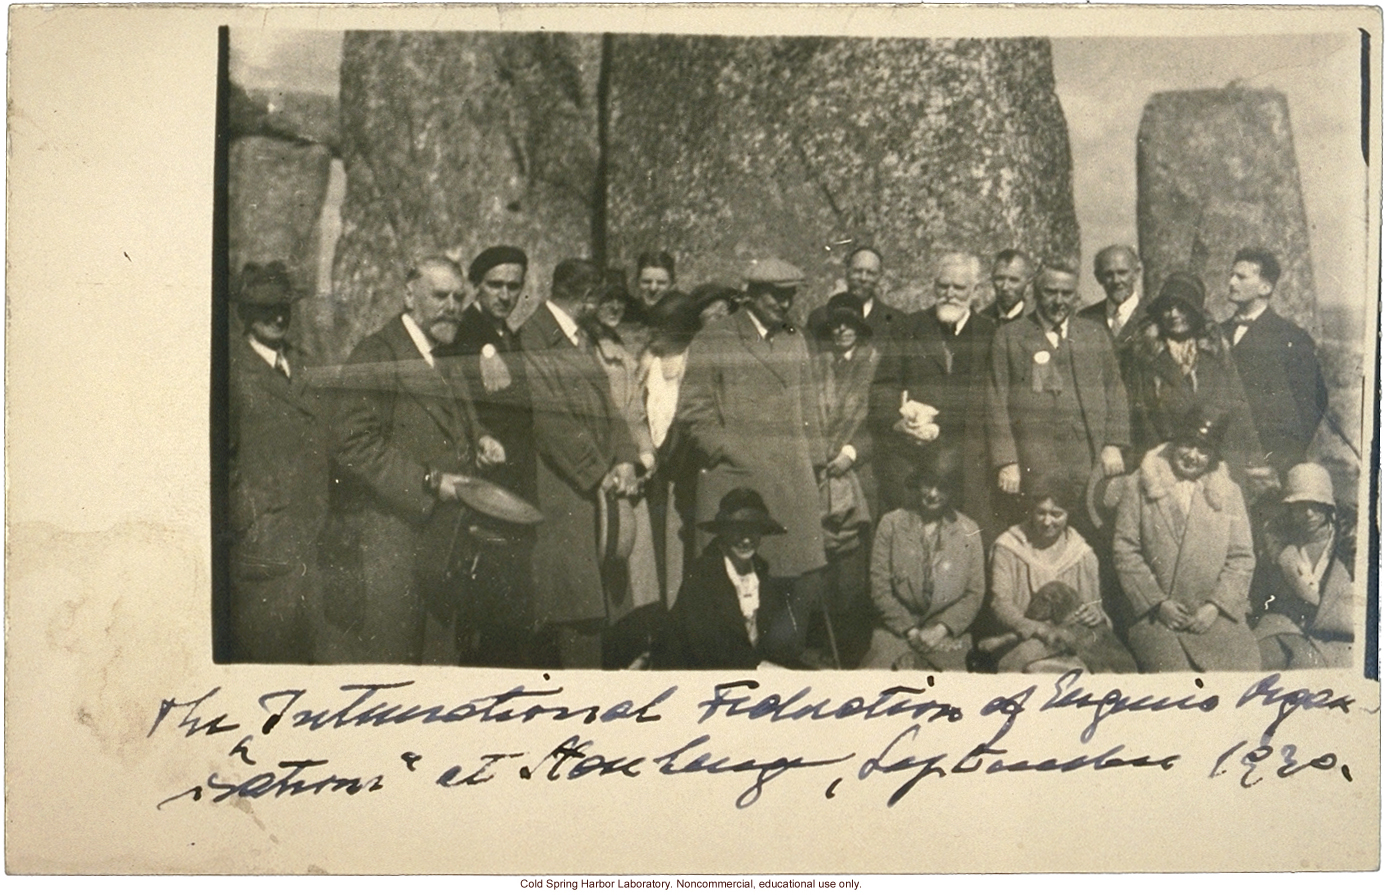 Harry H. Laughlin (far left) with International Federation of Eugenics Organizations at Stonehenge, England